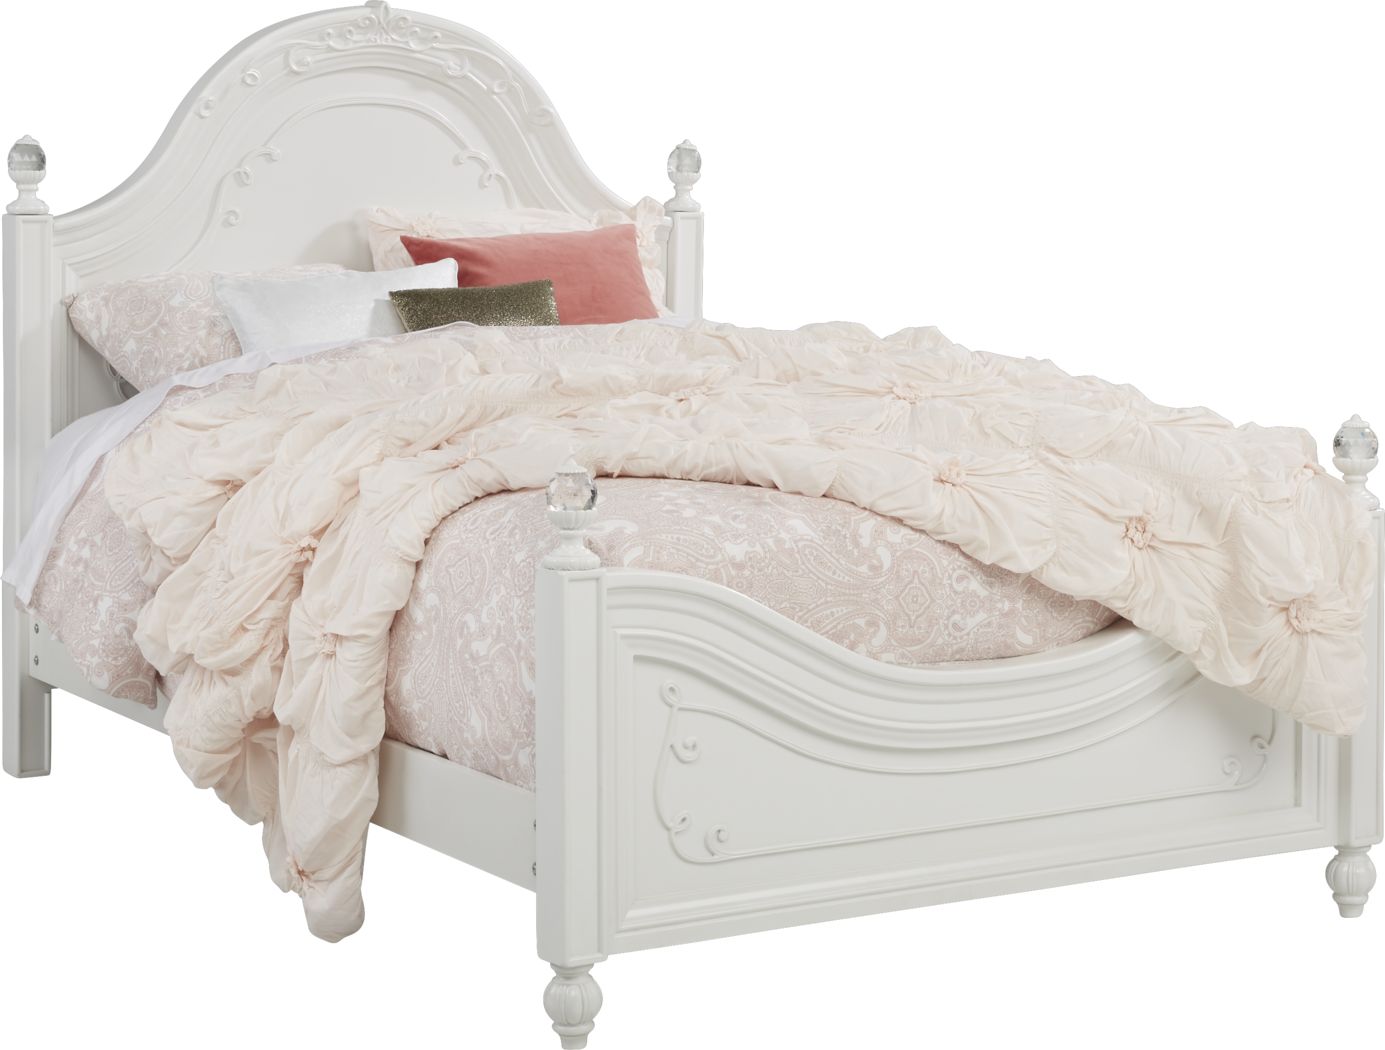 Disney Princess Bedroom Furniture, Disney Princess Bed Twin